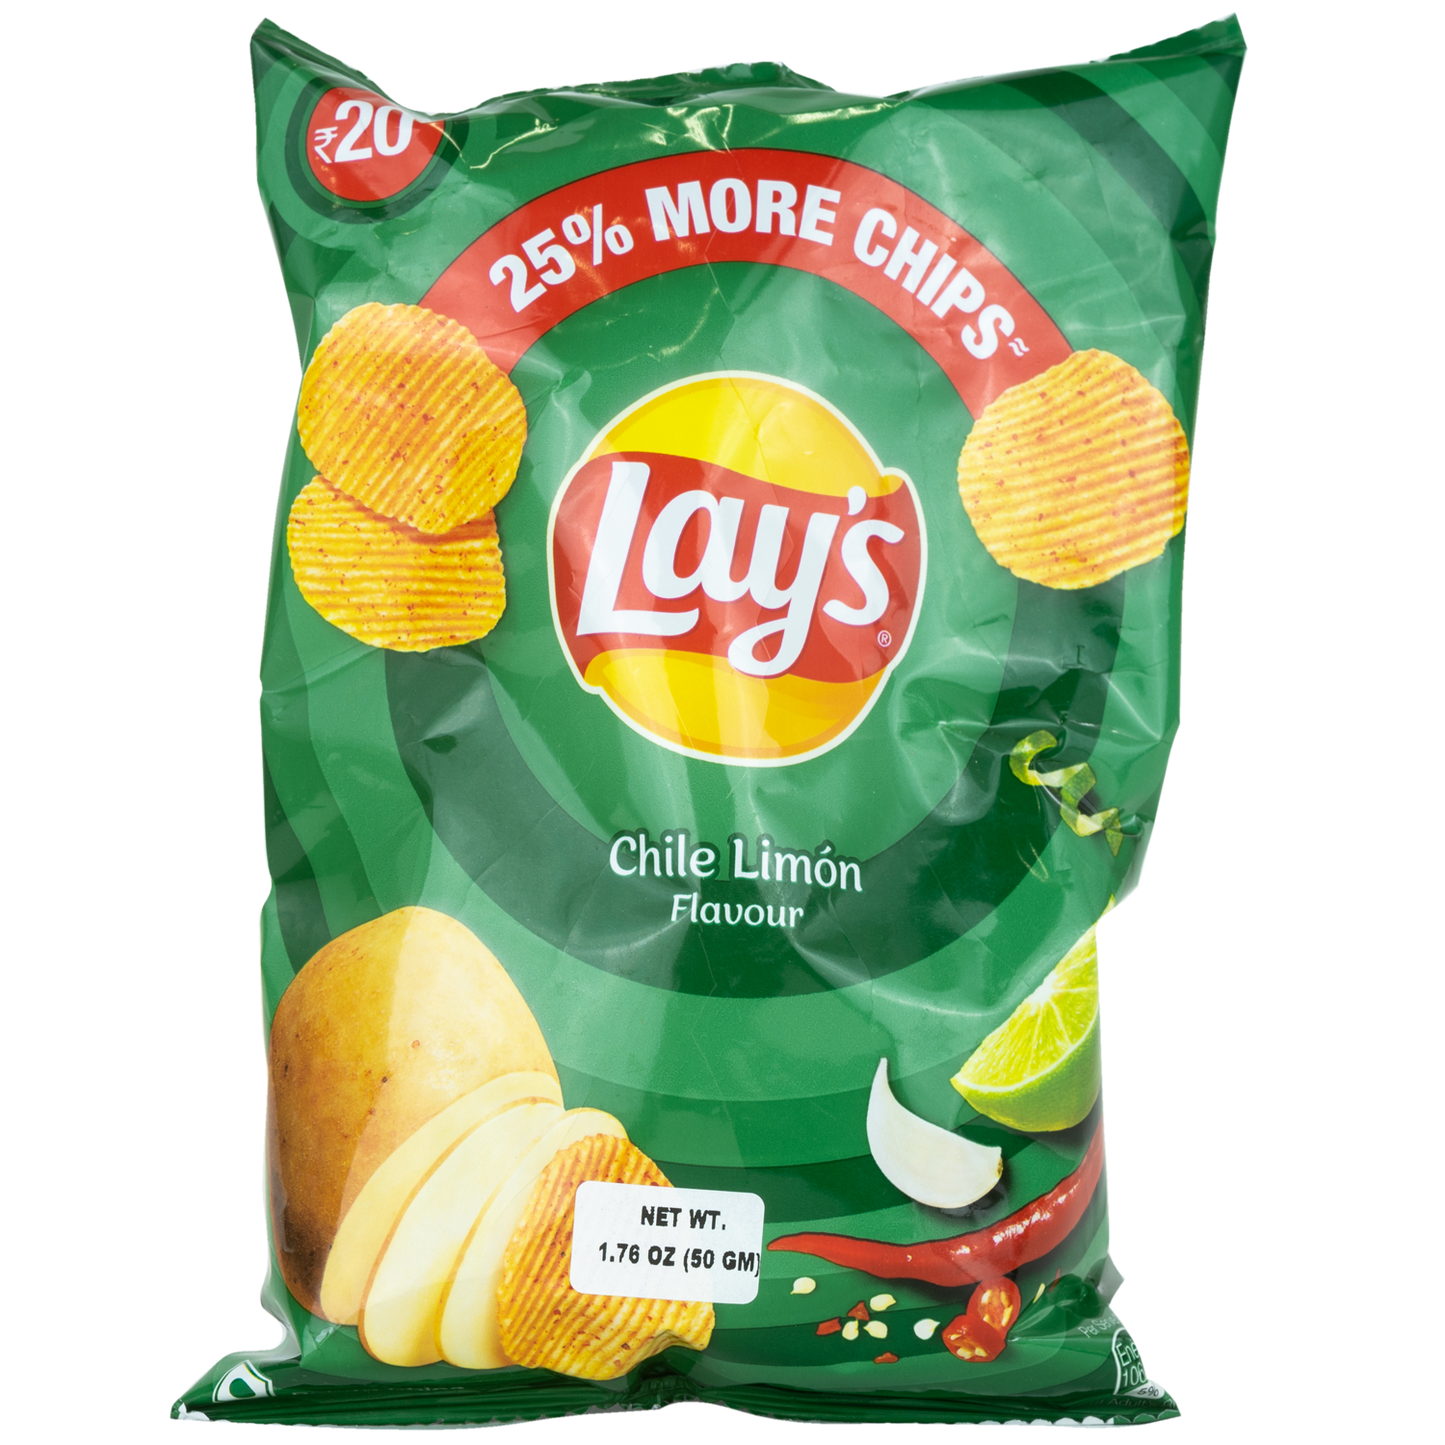 Lays Chile Lemon Flavor Chips 50g